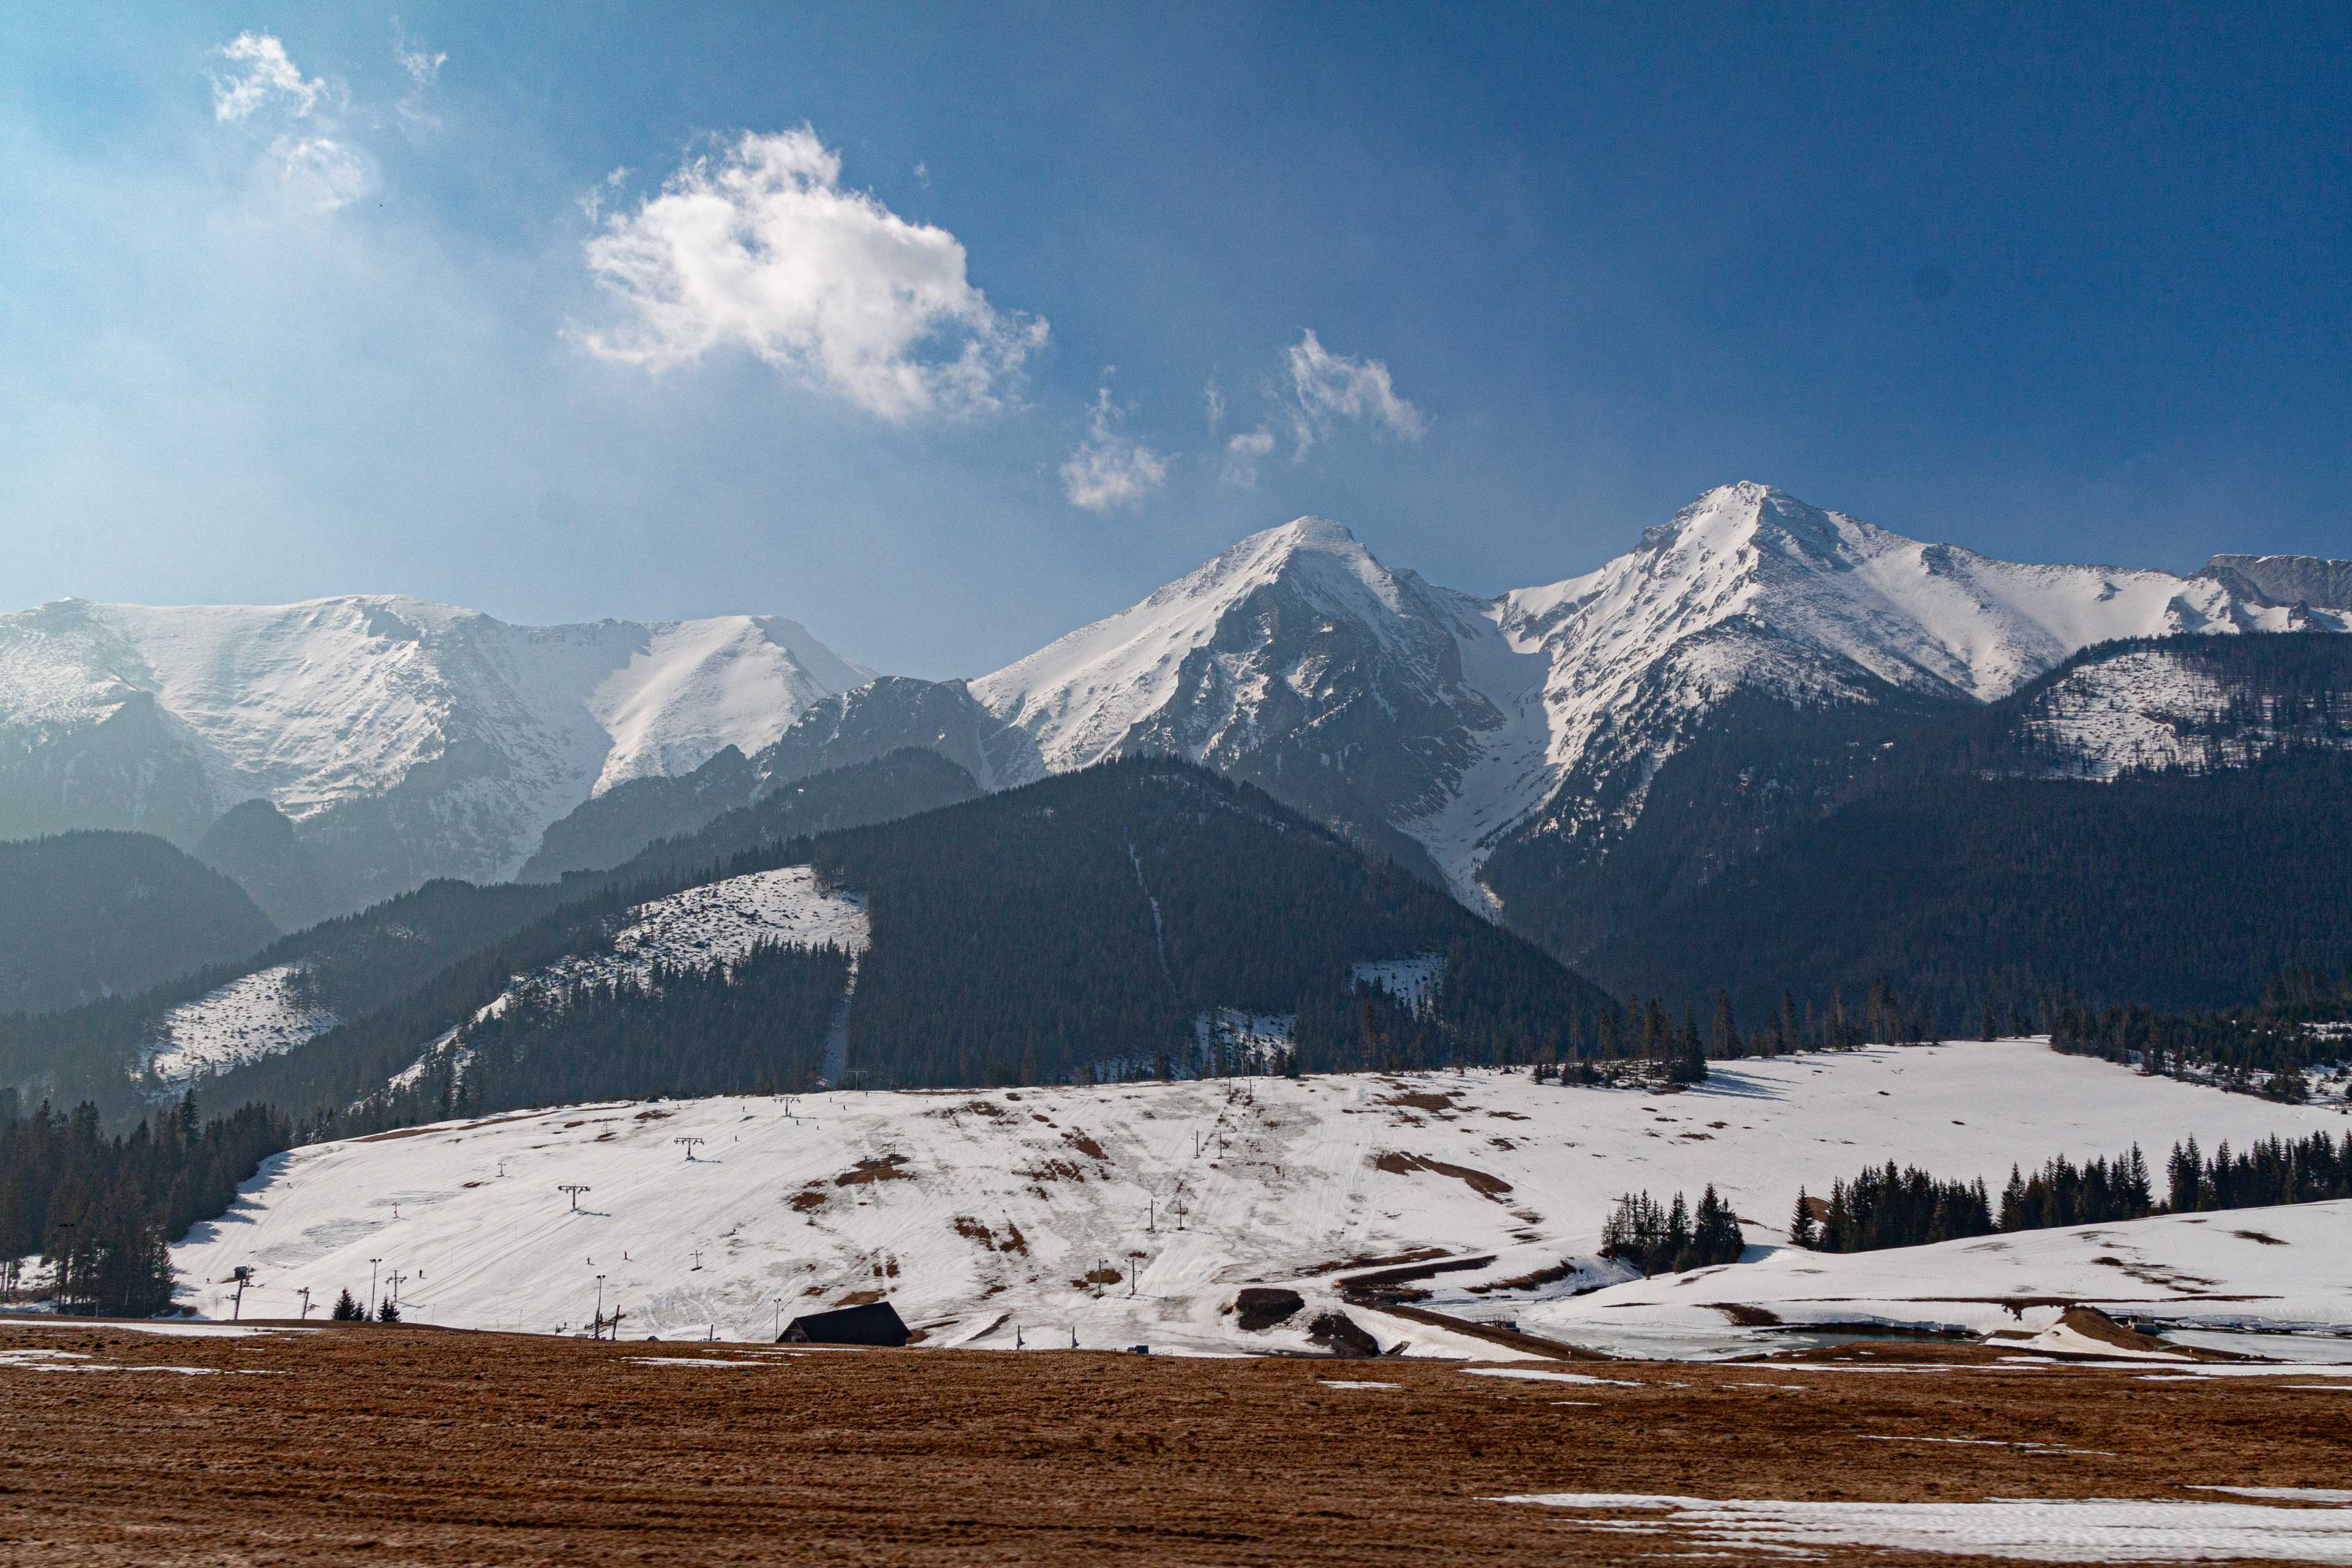 High Tatras seen from the nearby ski resort Ždiar